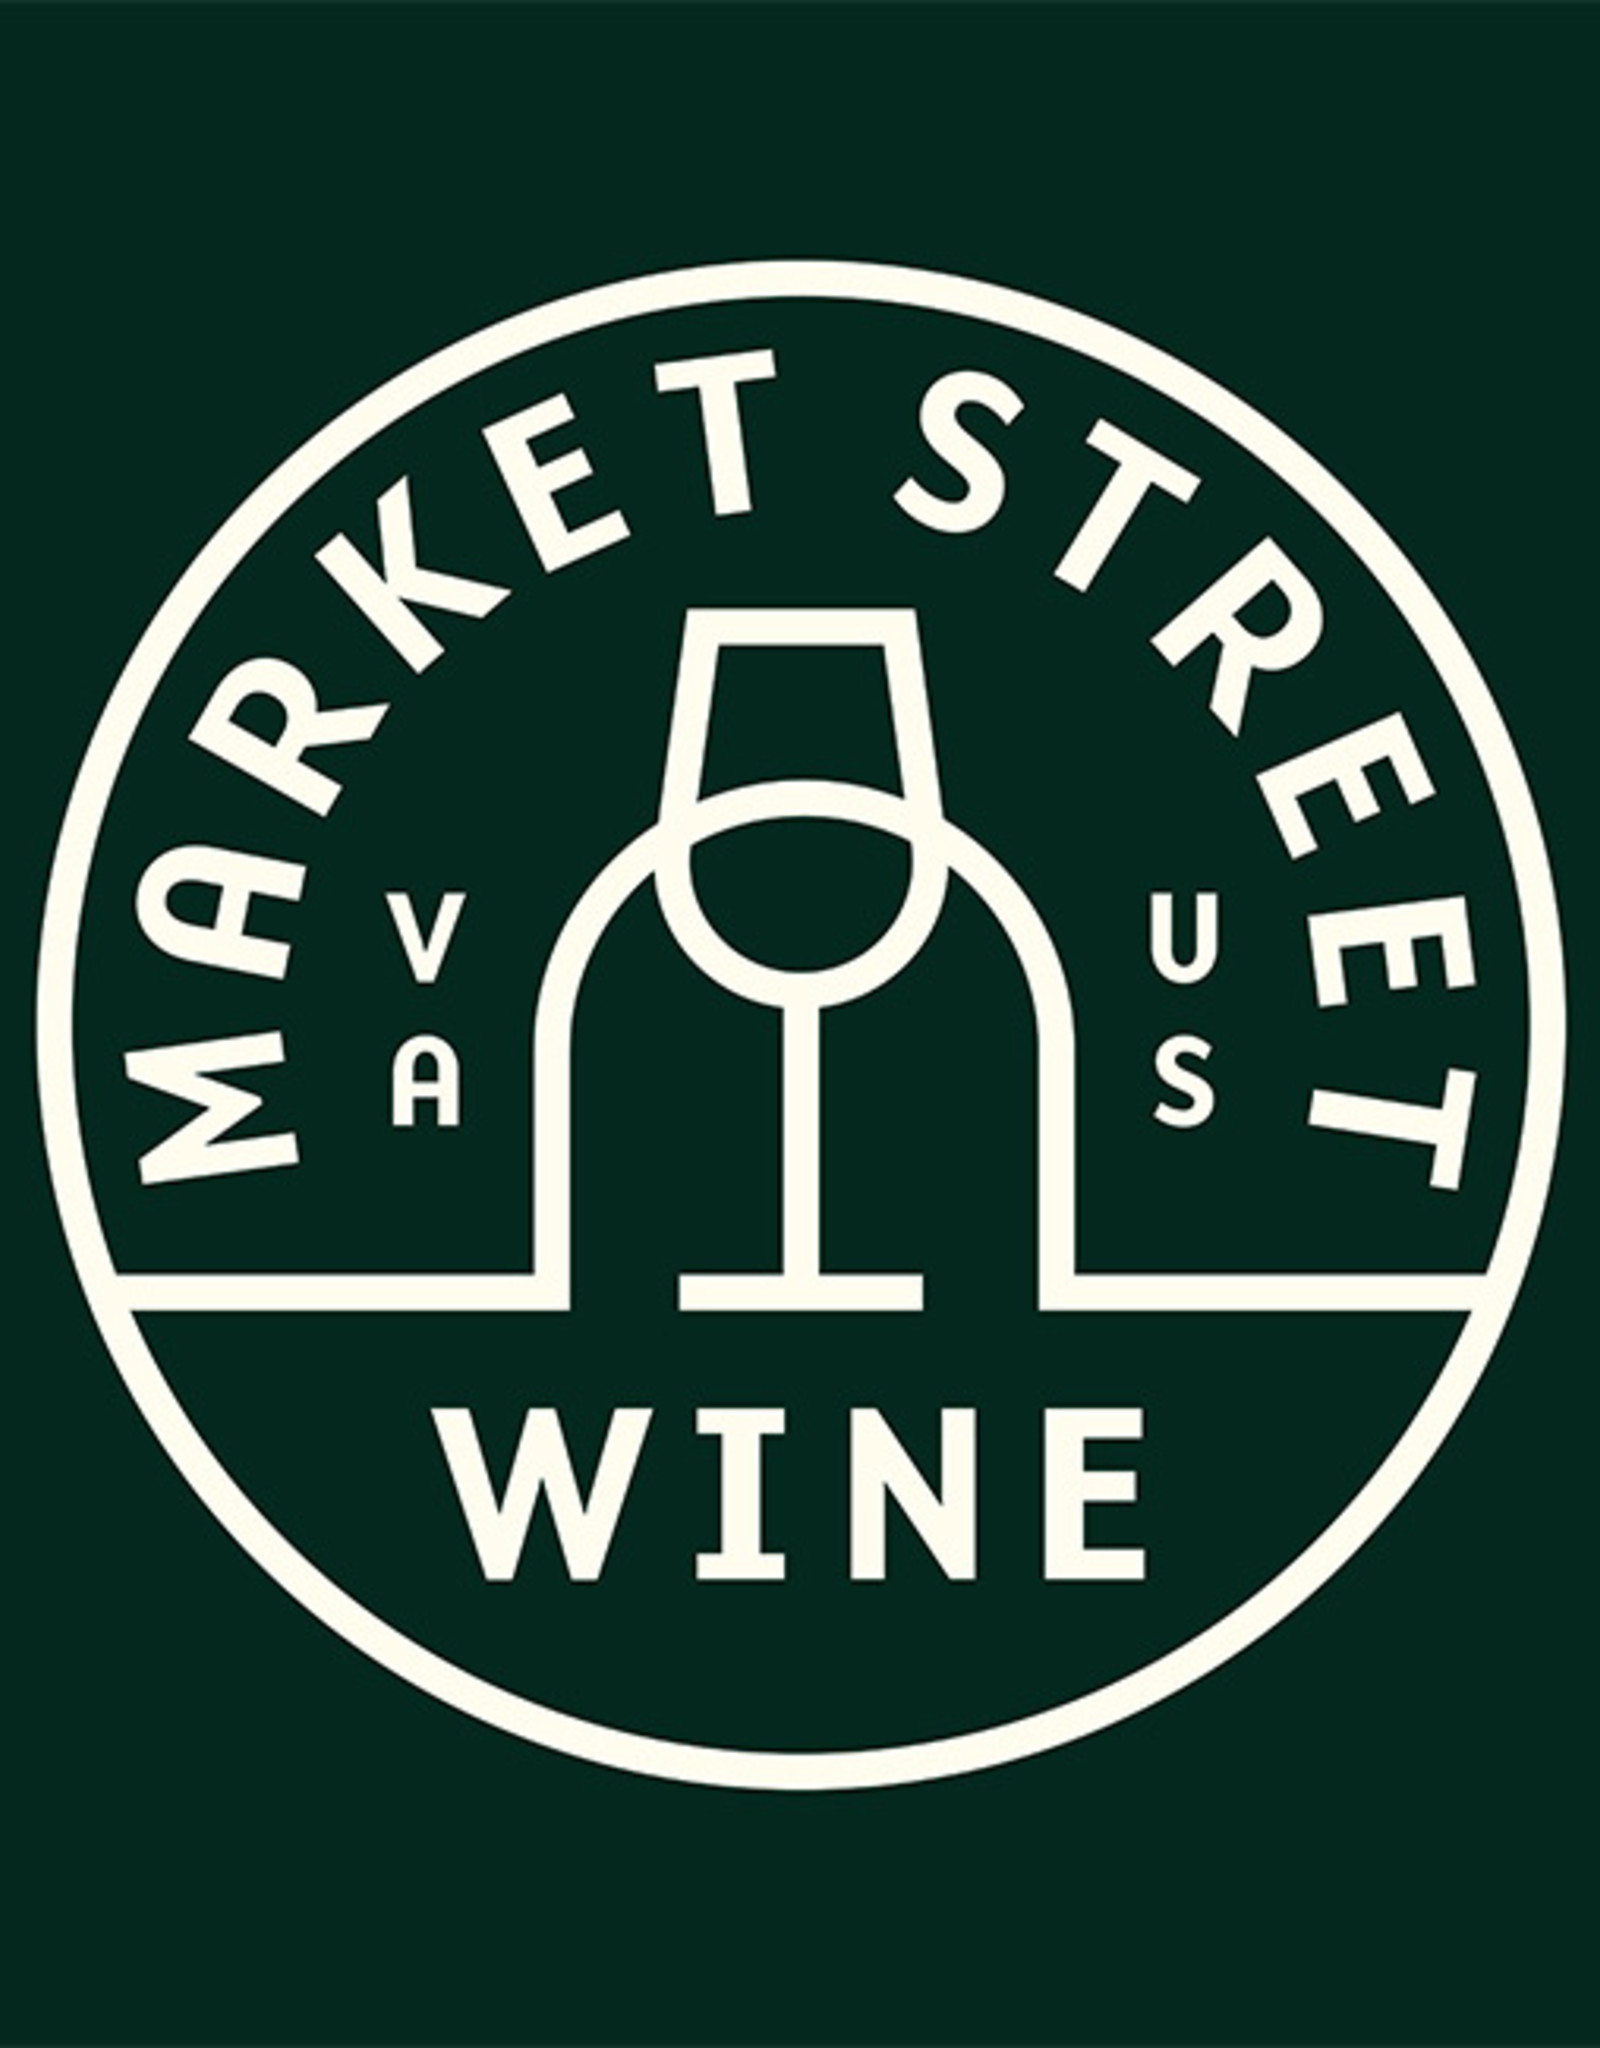 Market Street Wine Gift Card